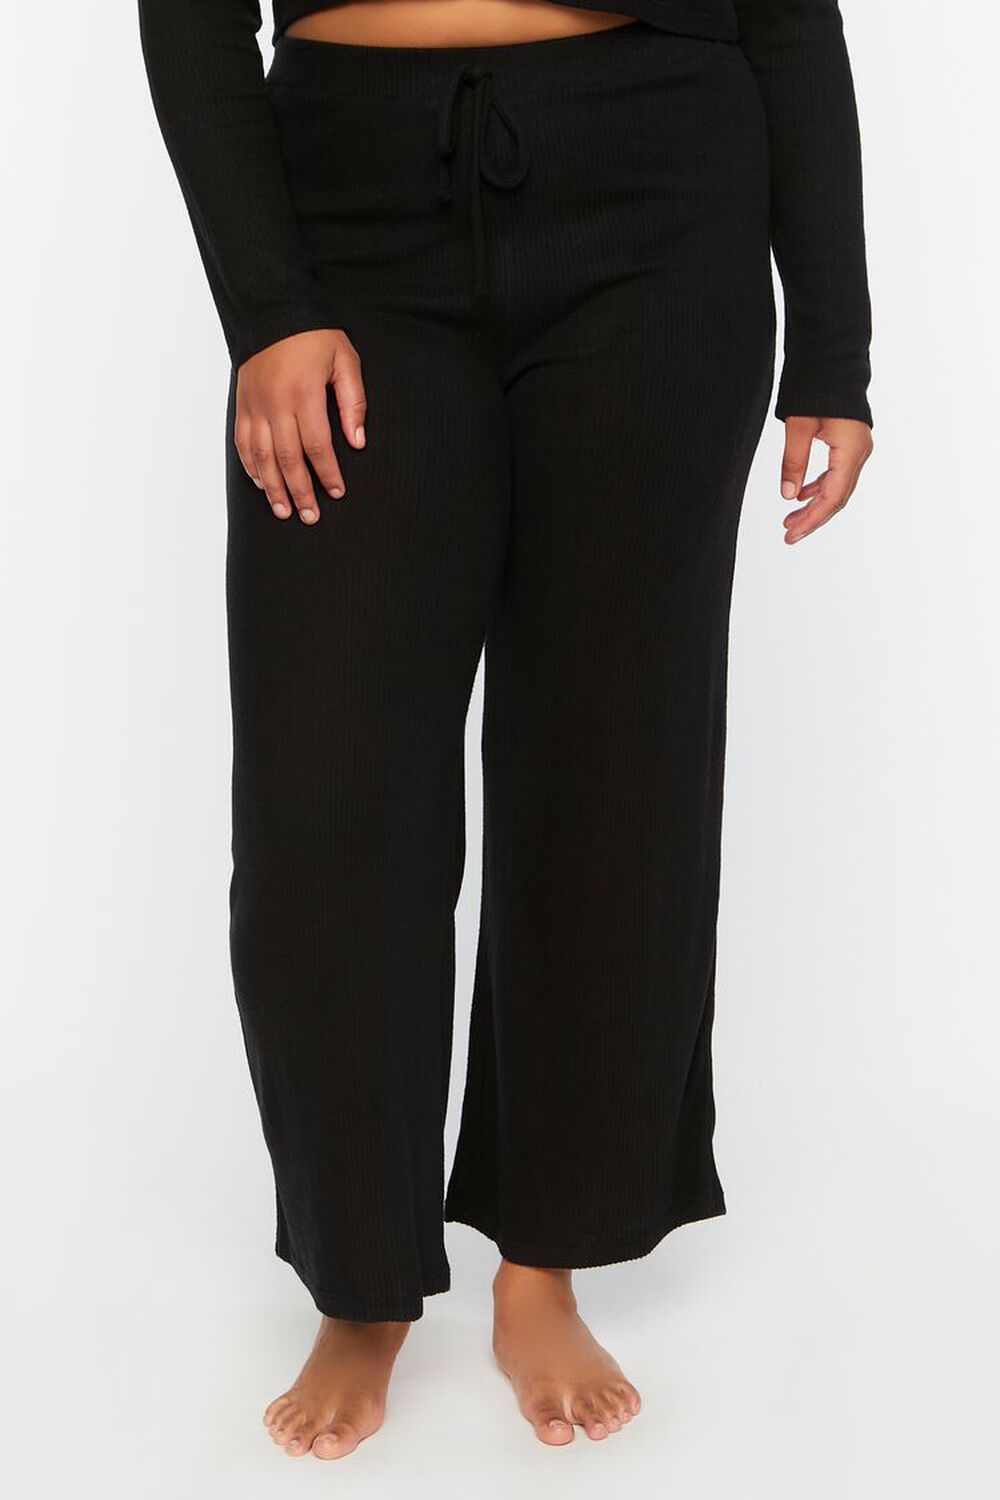 BLACK Plus Size Ribbed Lounge Pants, image 2